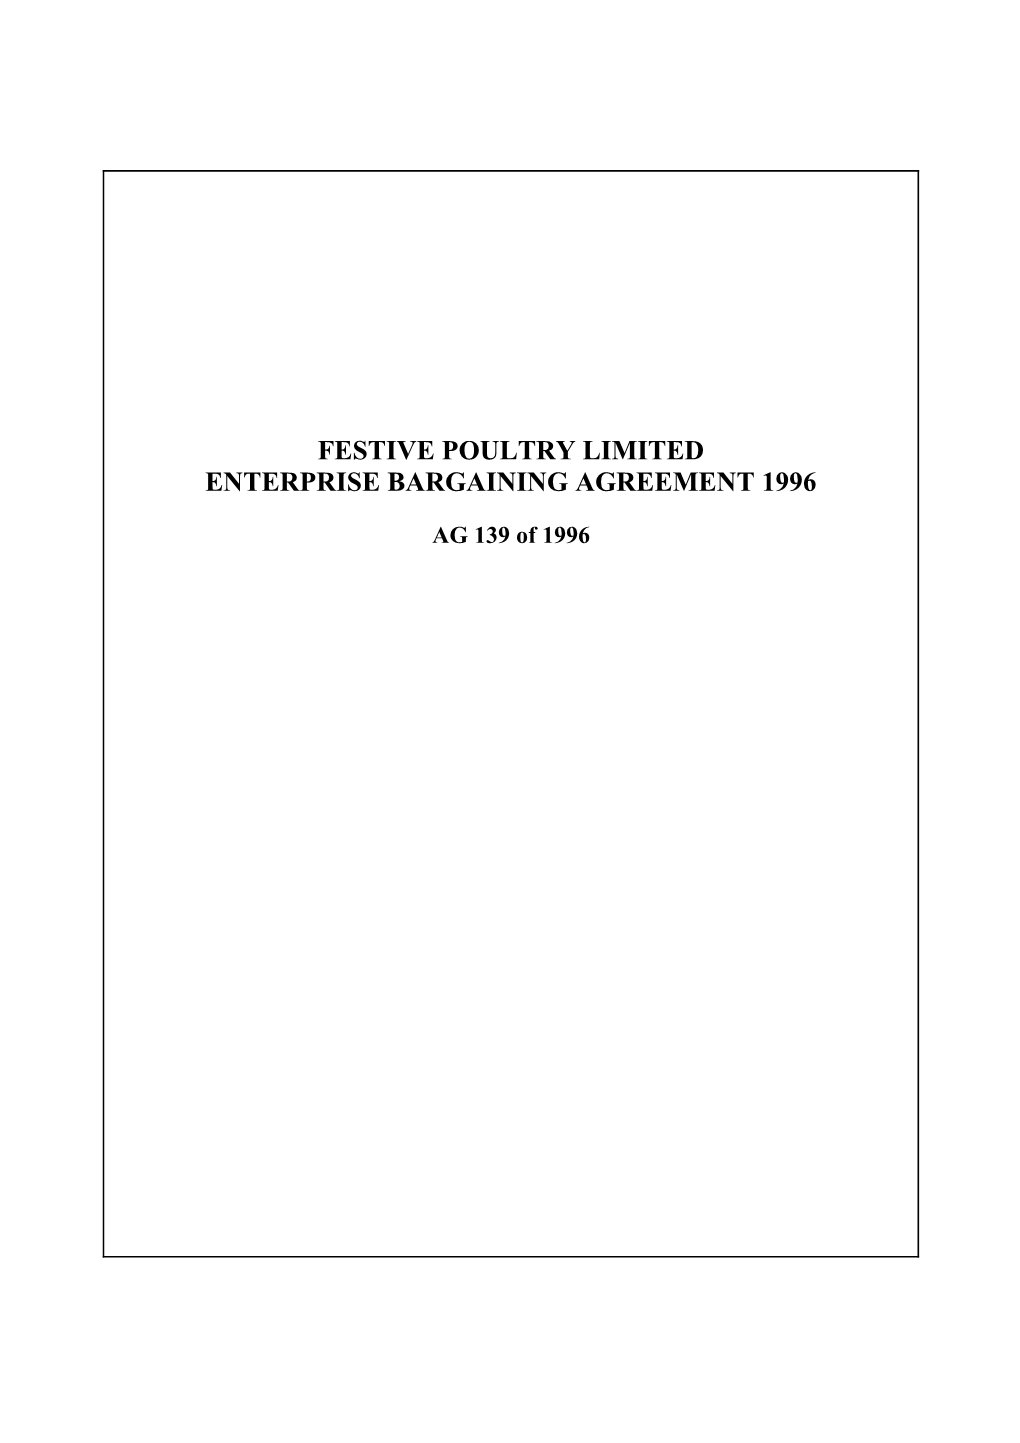 Festive Poultry Limited Enterprise Bargaining Agreement 1996